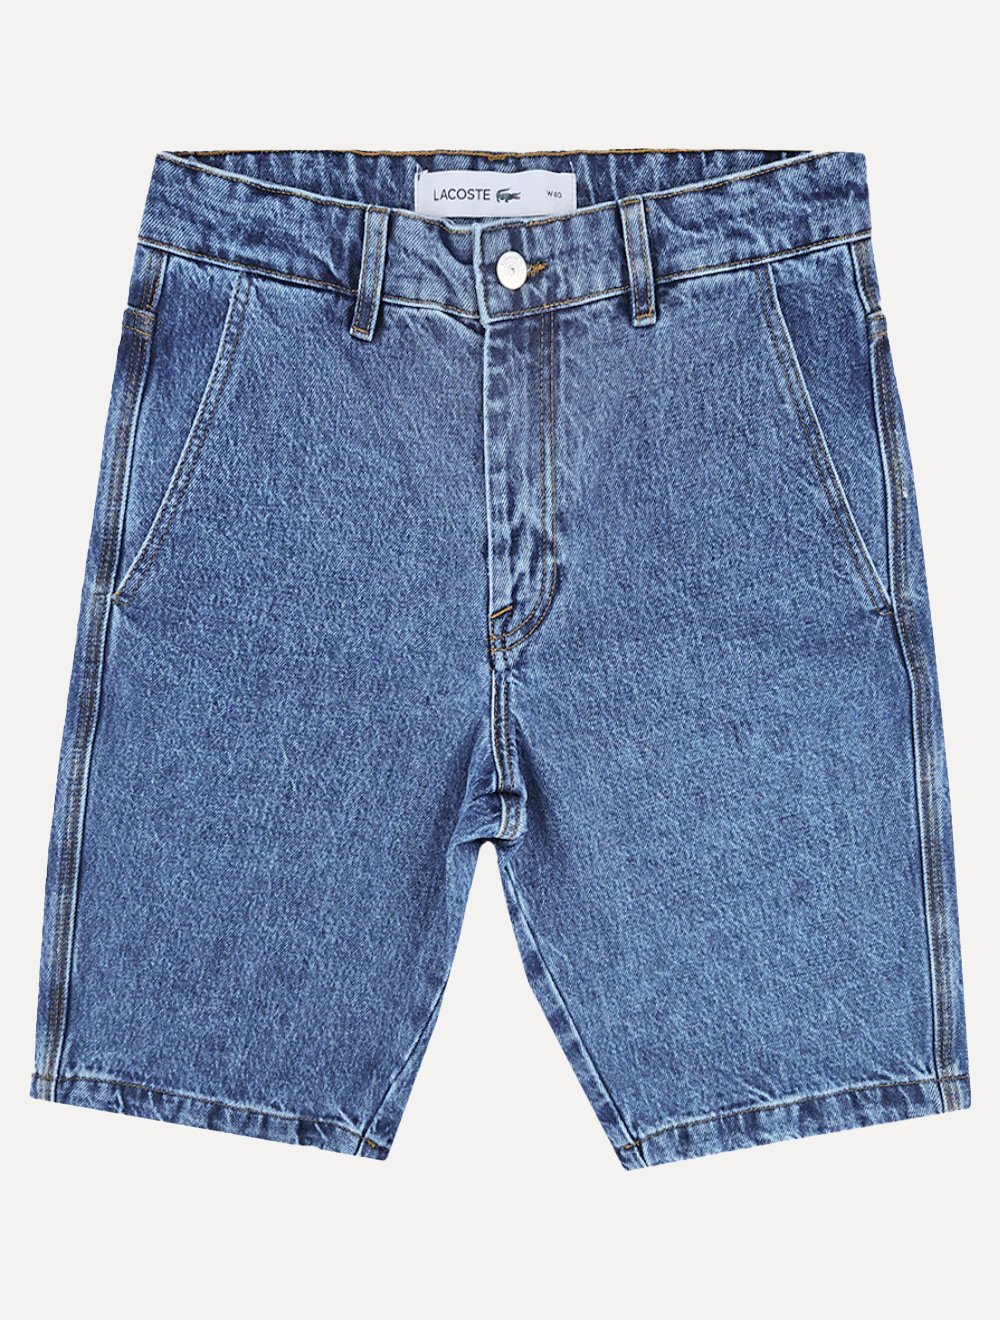 Bermuda Lacoste Jeans Masculina Essential Cotton Azul